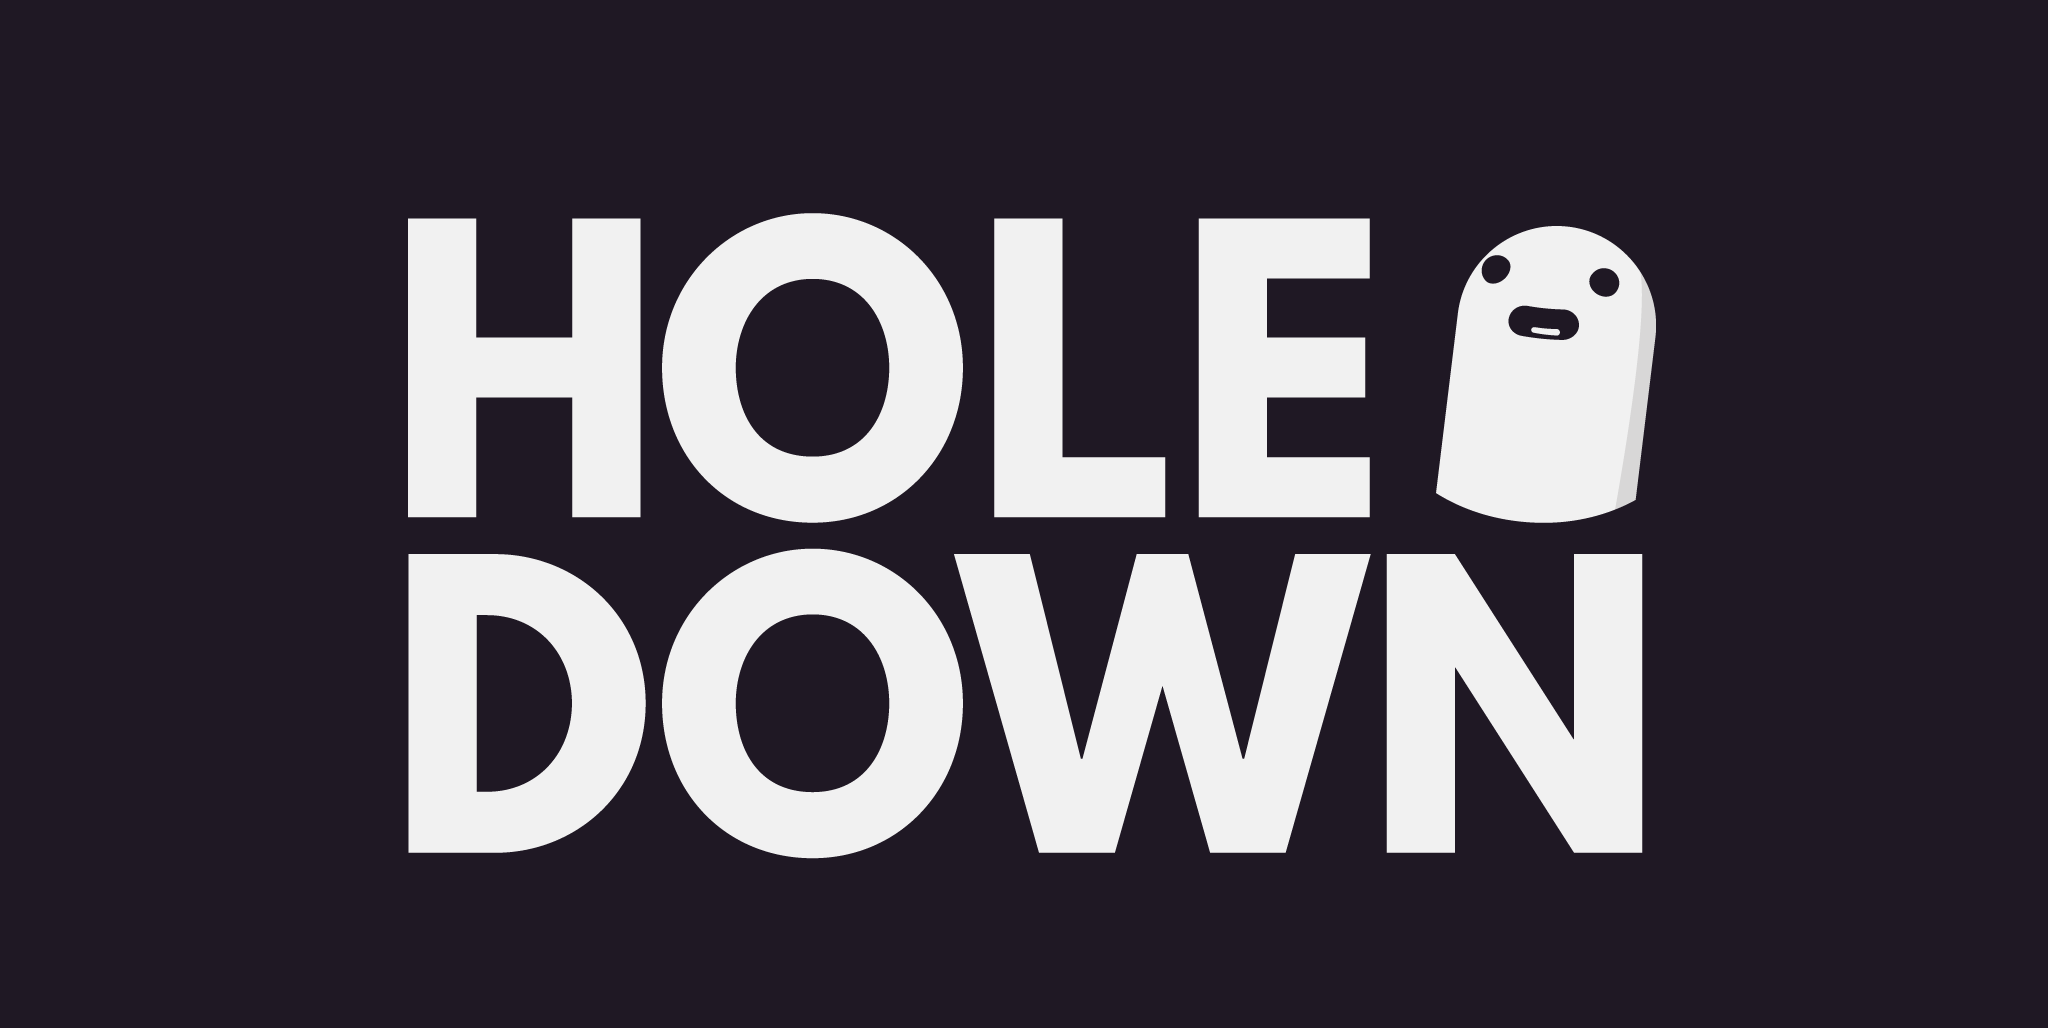 Holedown